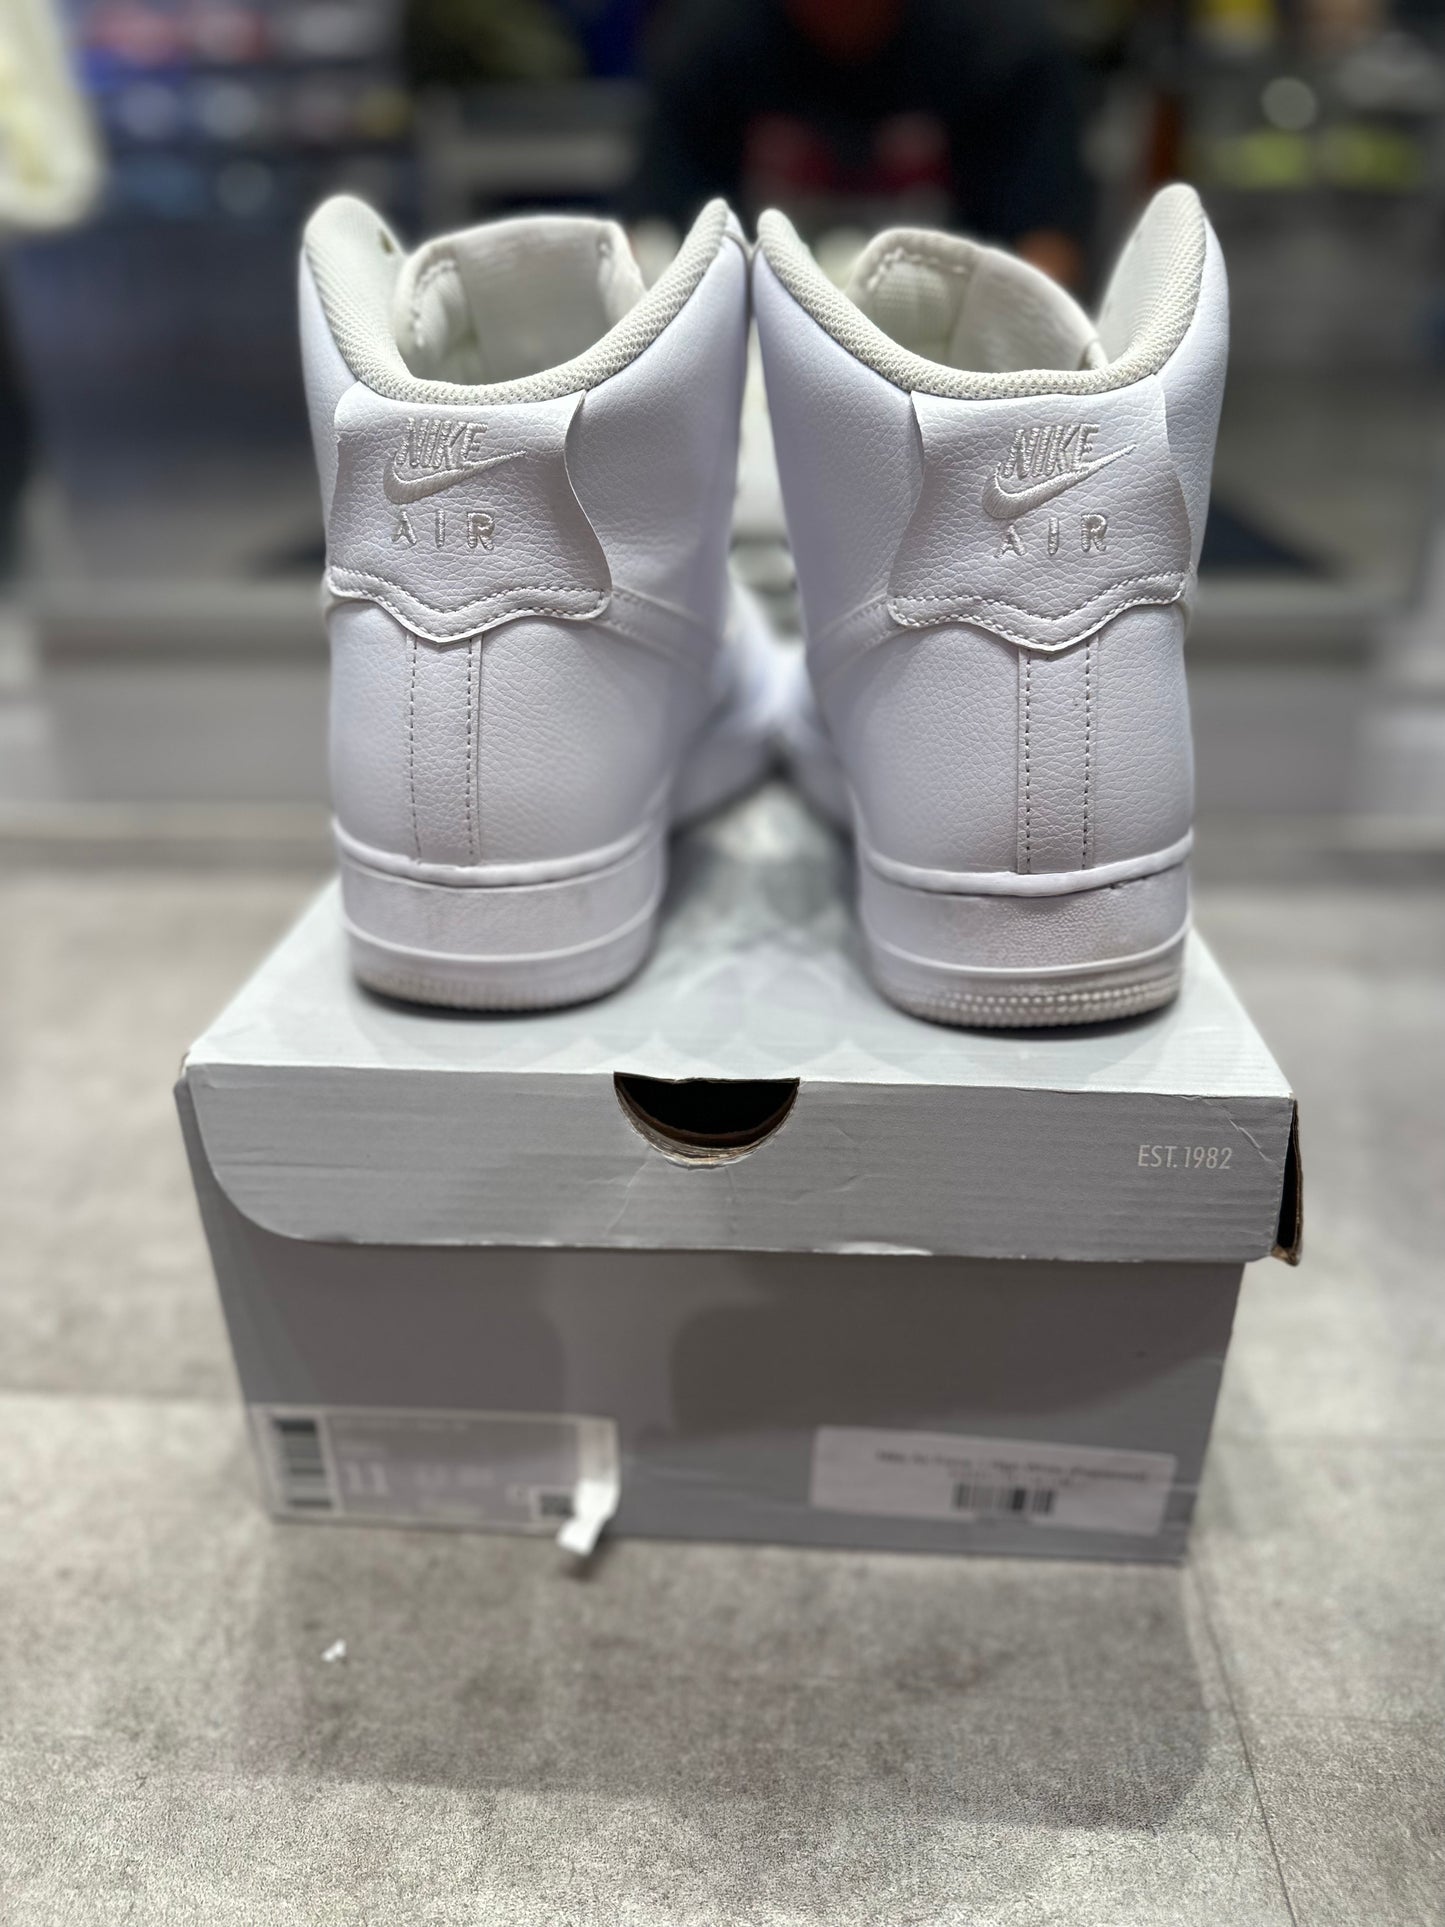 Nike Air Force 1 High White (Preowned)